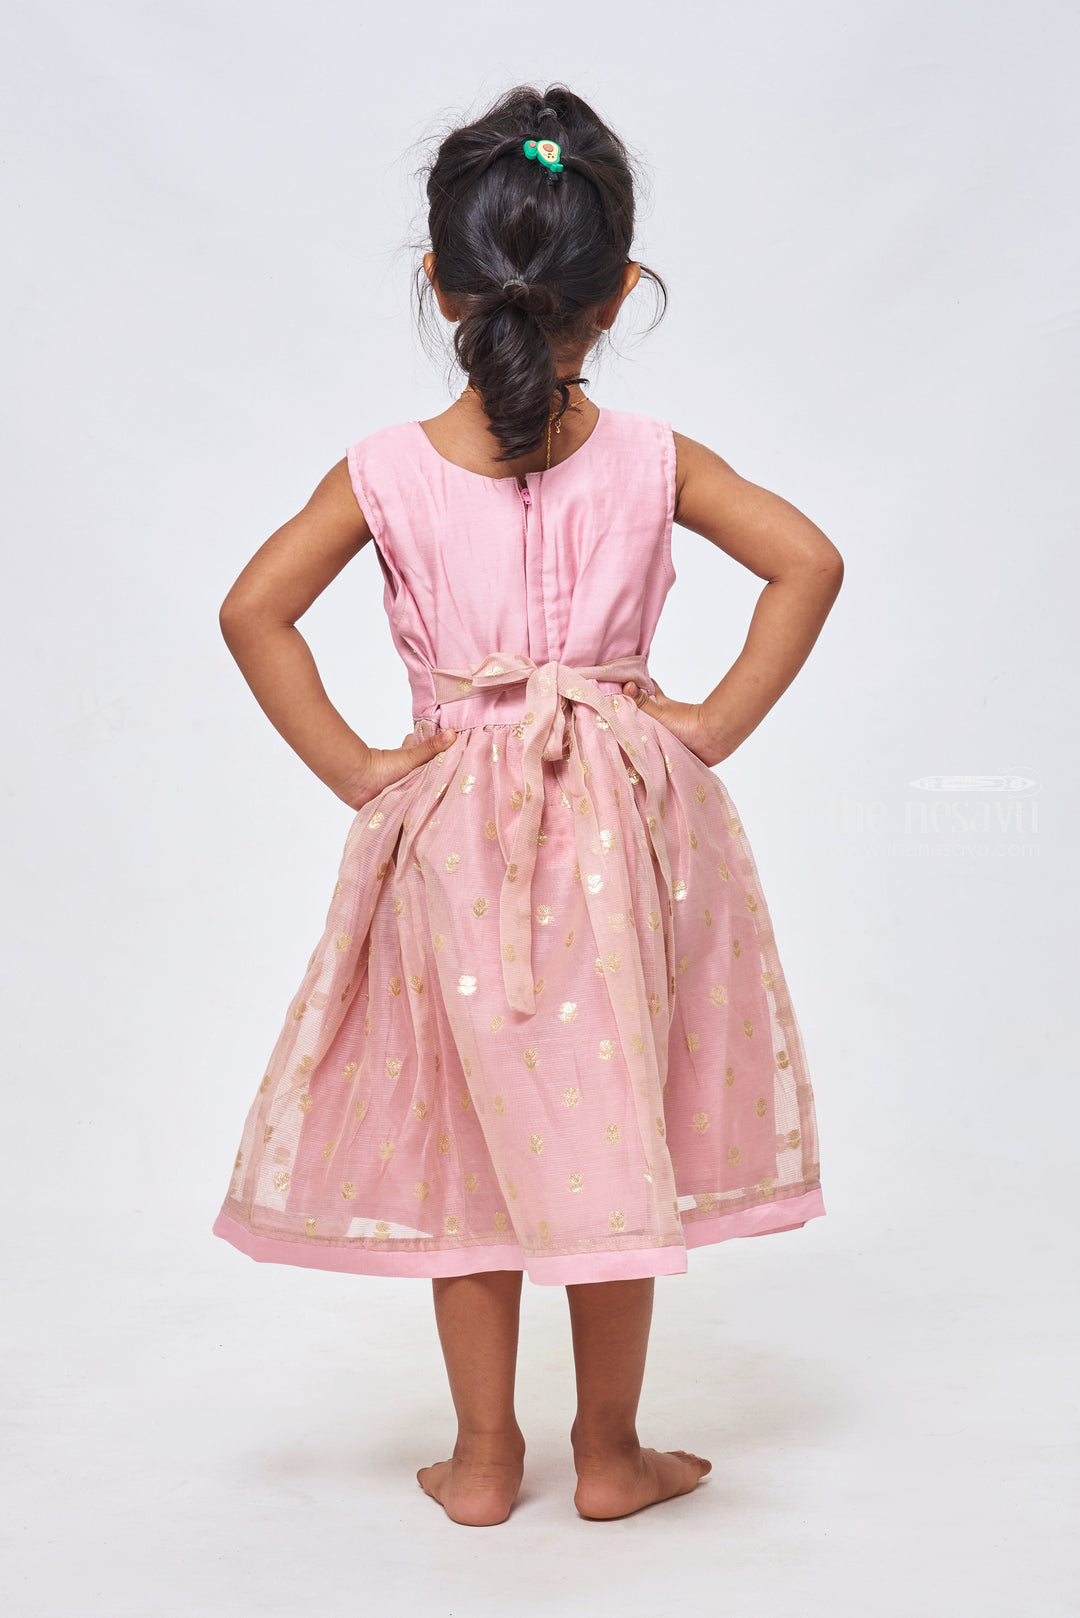 The Nesavu Girls Cotton Frock Pink Passion: Girls Gota Mirror Embroidered Chanderi Frock Nesavu Charming Cotton Frocks: Explore Casual & Designer Dresses for Girls | The Nesavu